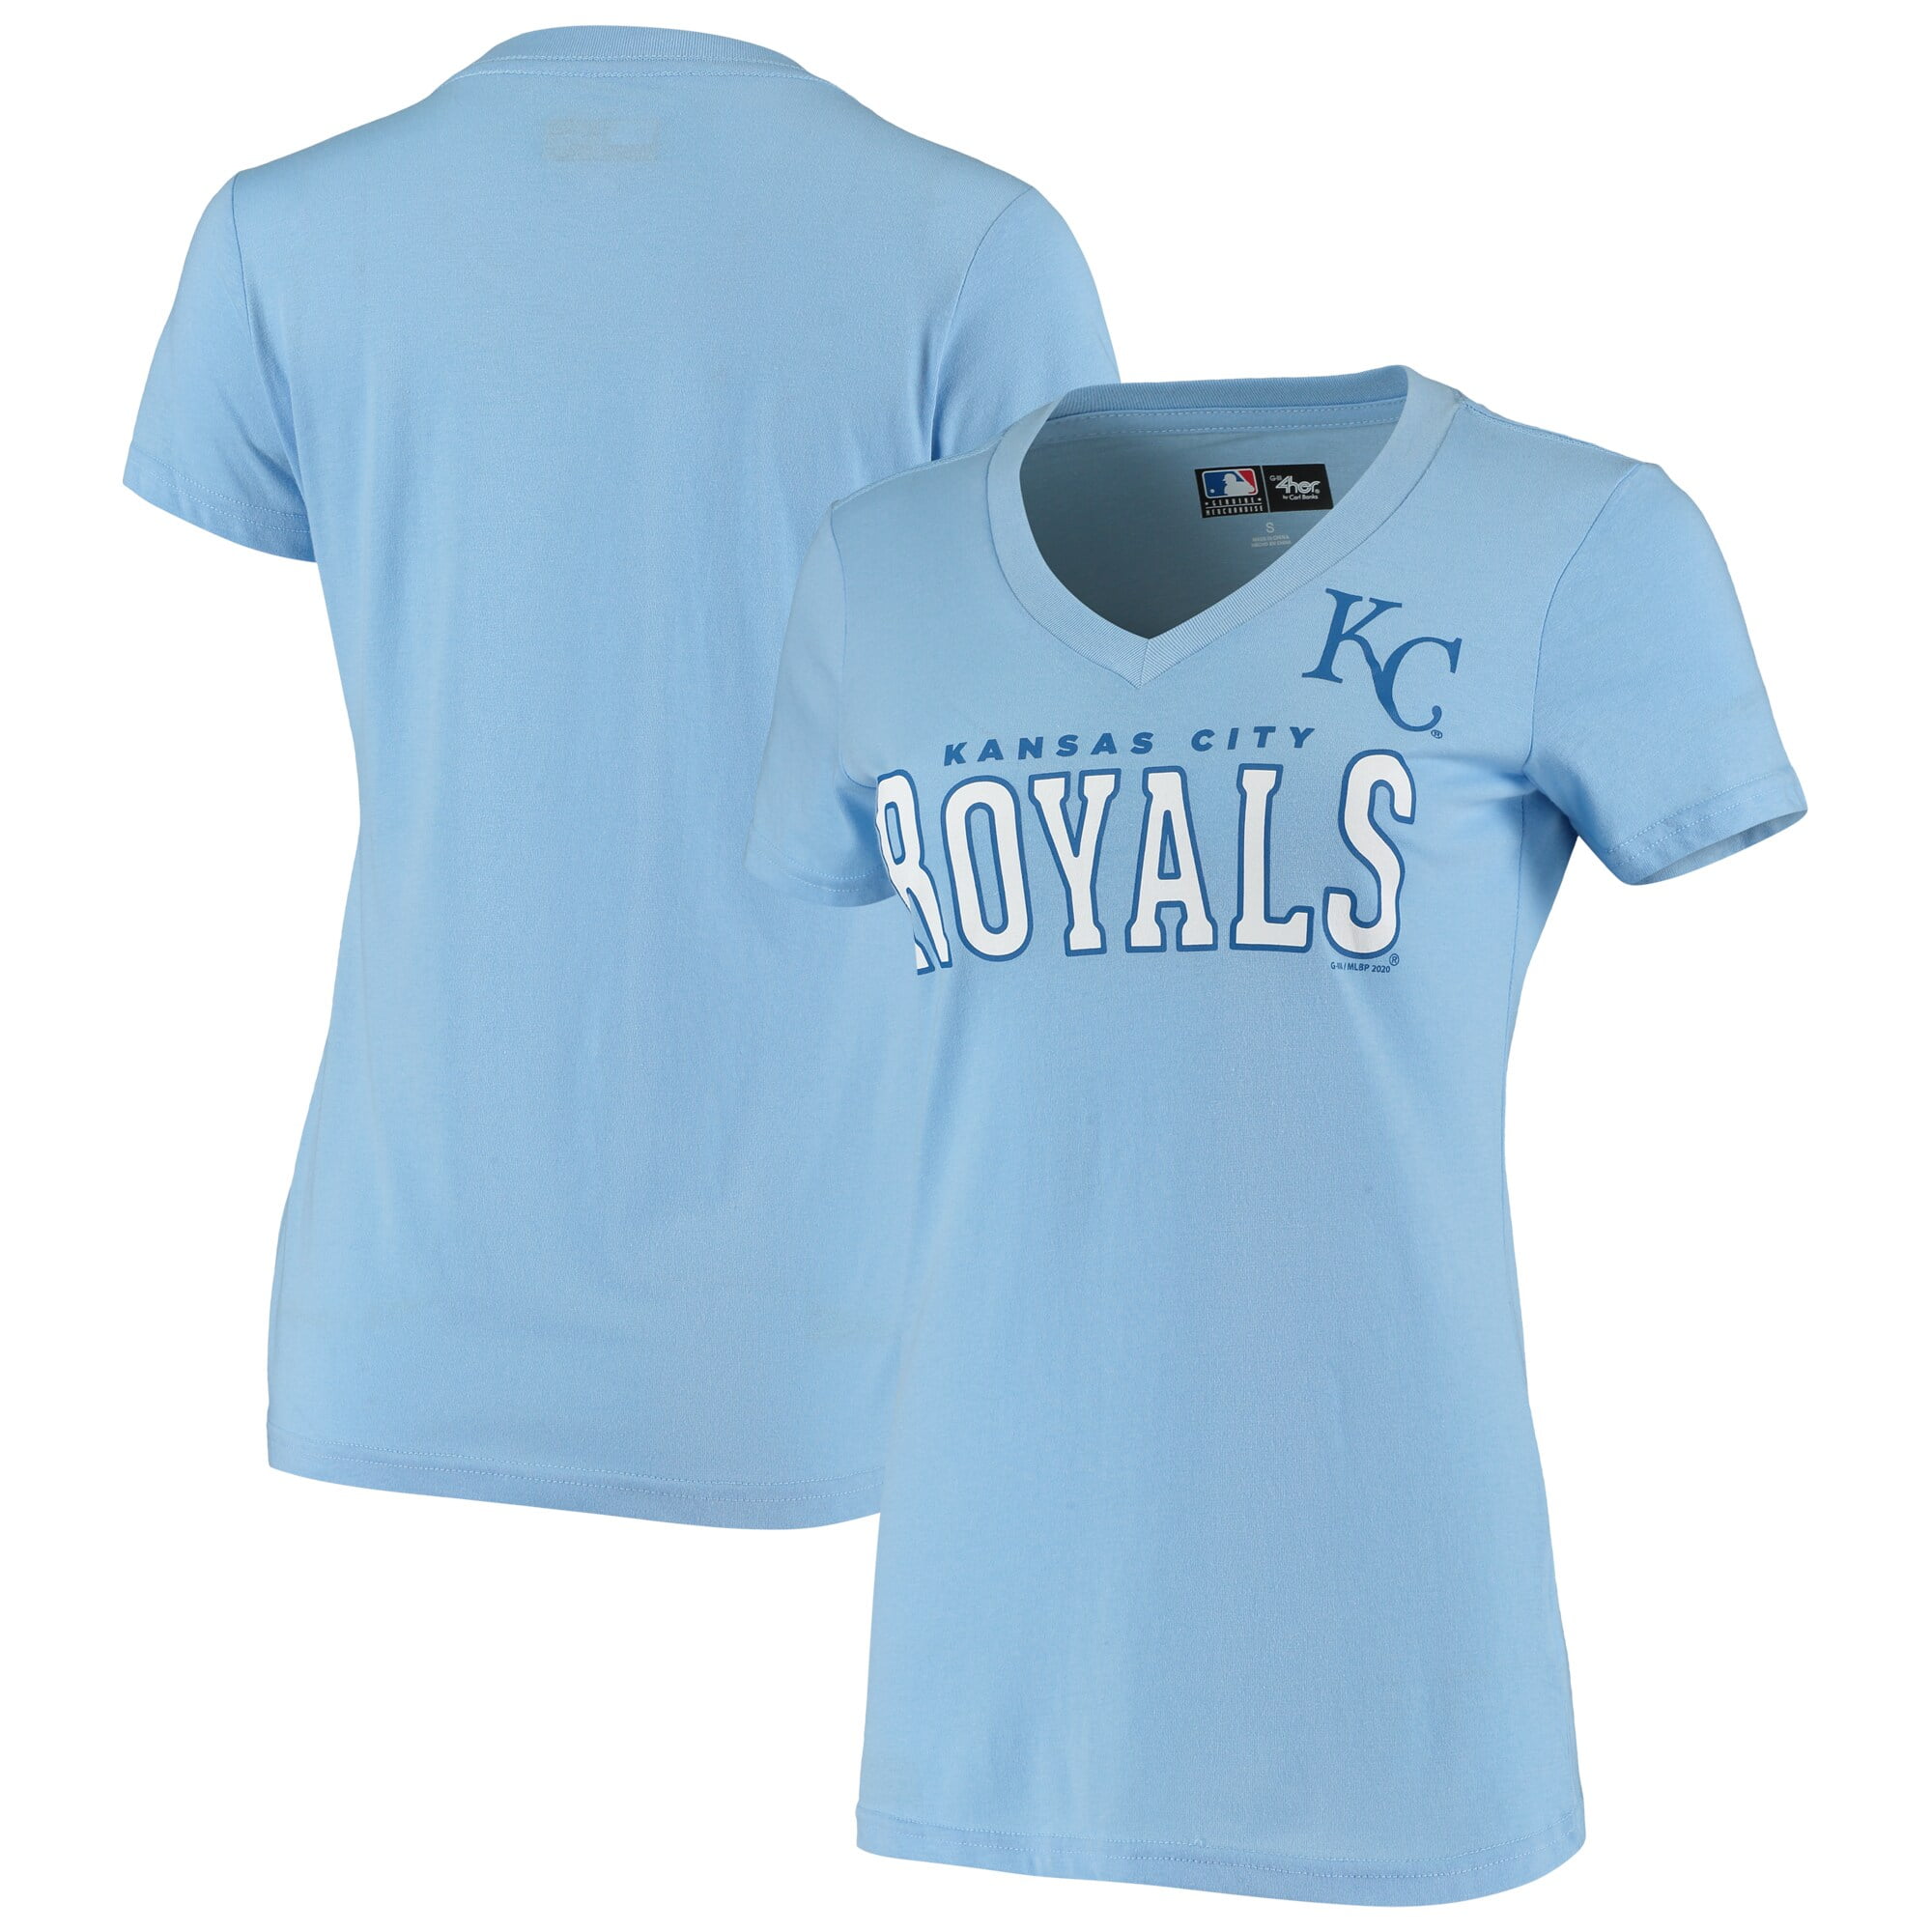 royals shirts for girls